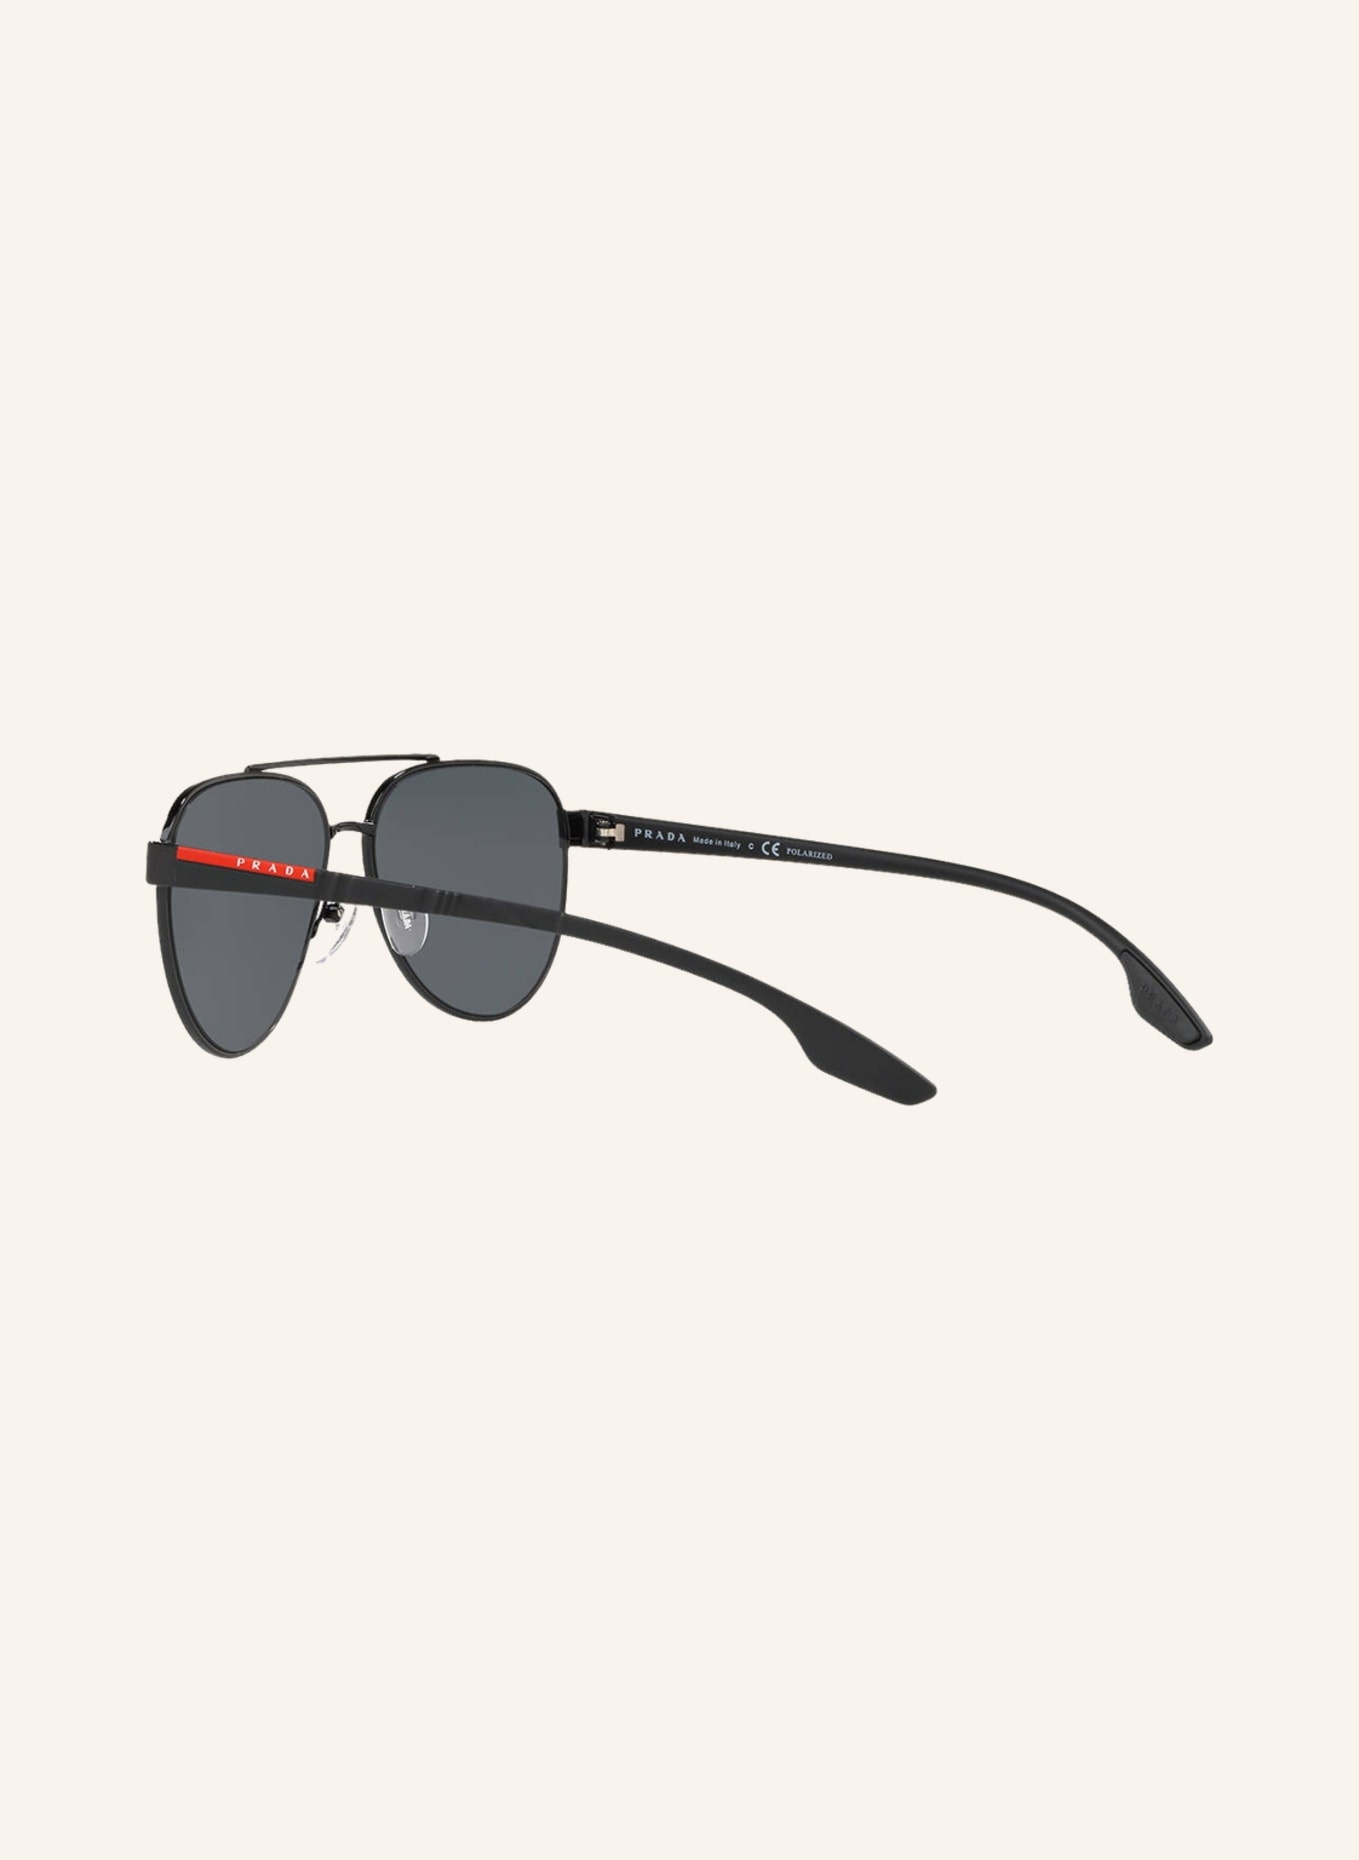 Prada sunglasses aviator men | Aviator sunglasses mens, Mens aviators, Aviator  sunglasses